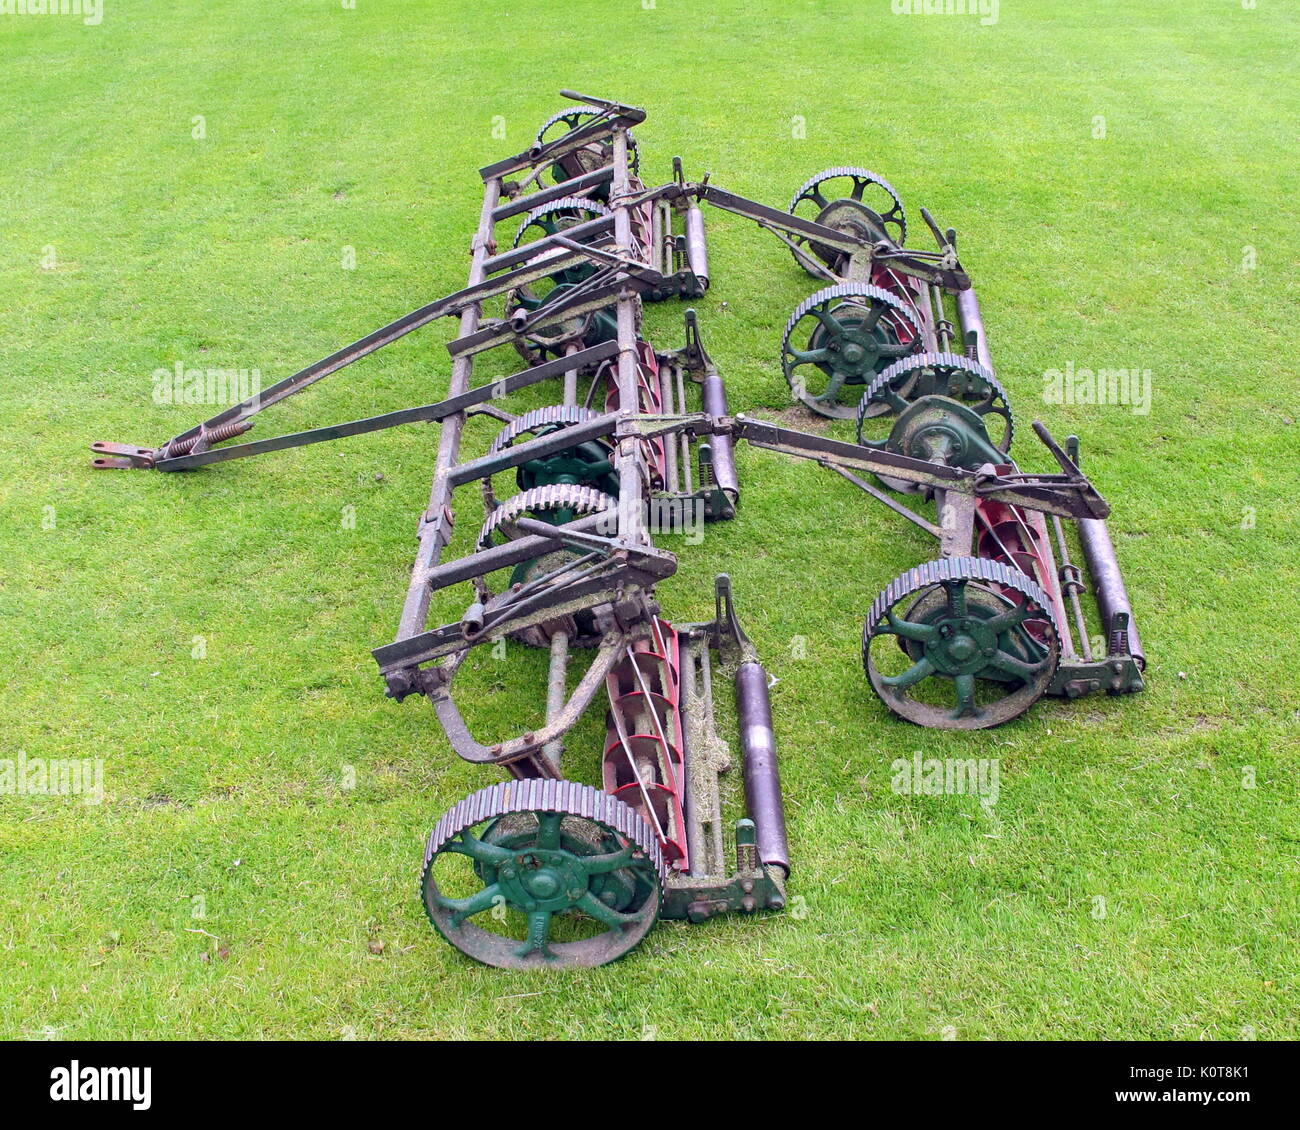 vintage lawn mower tractor  cutting blades green grass pitch  Hamilton Crescent cricket ground Glasgow, Scotland historic football  location Stock Photo